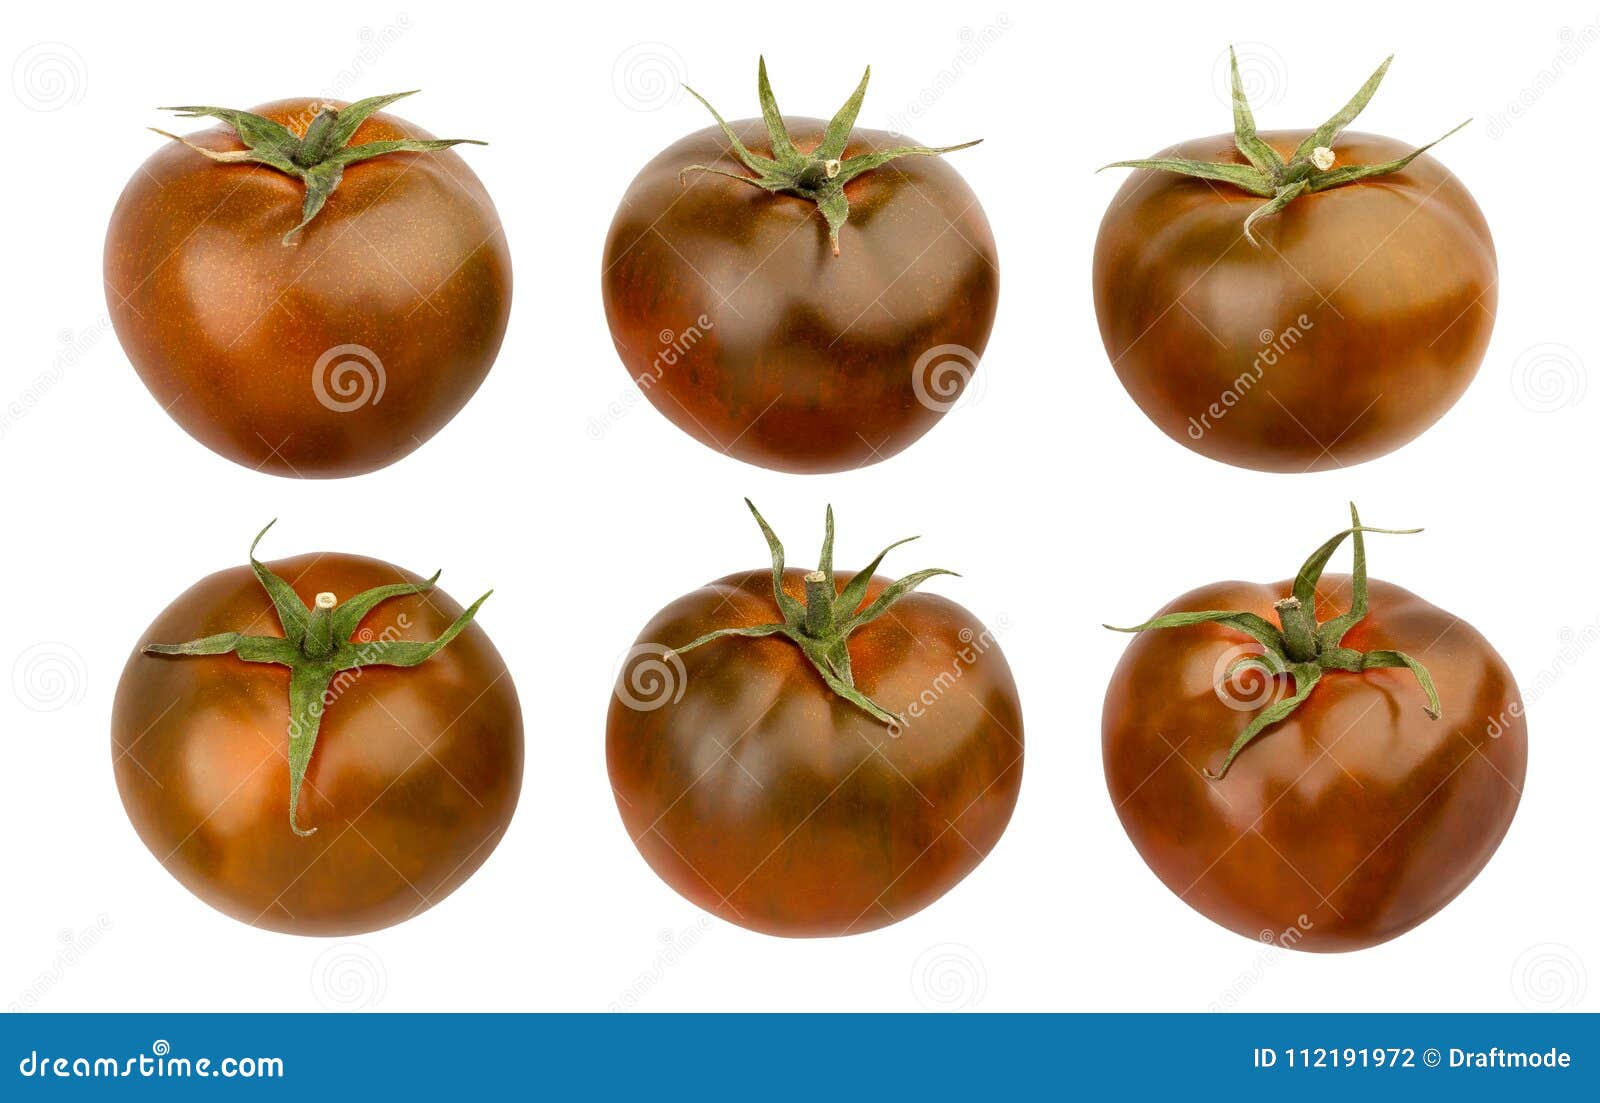 kumato tomato